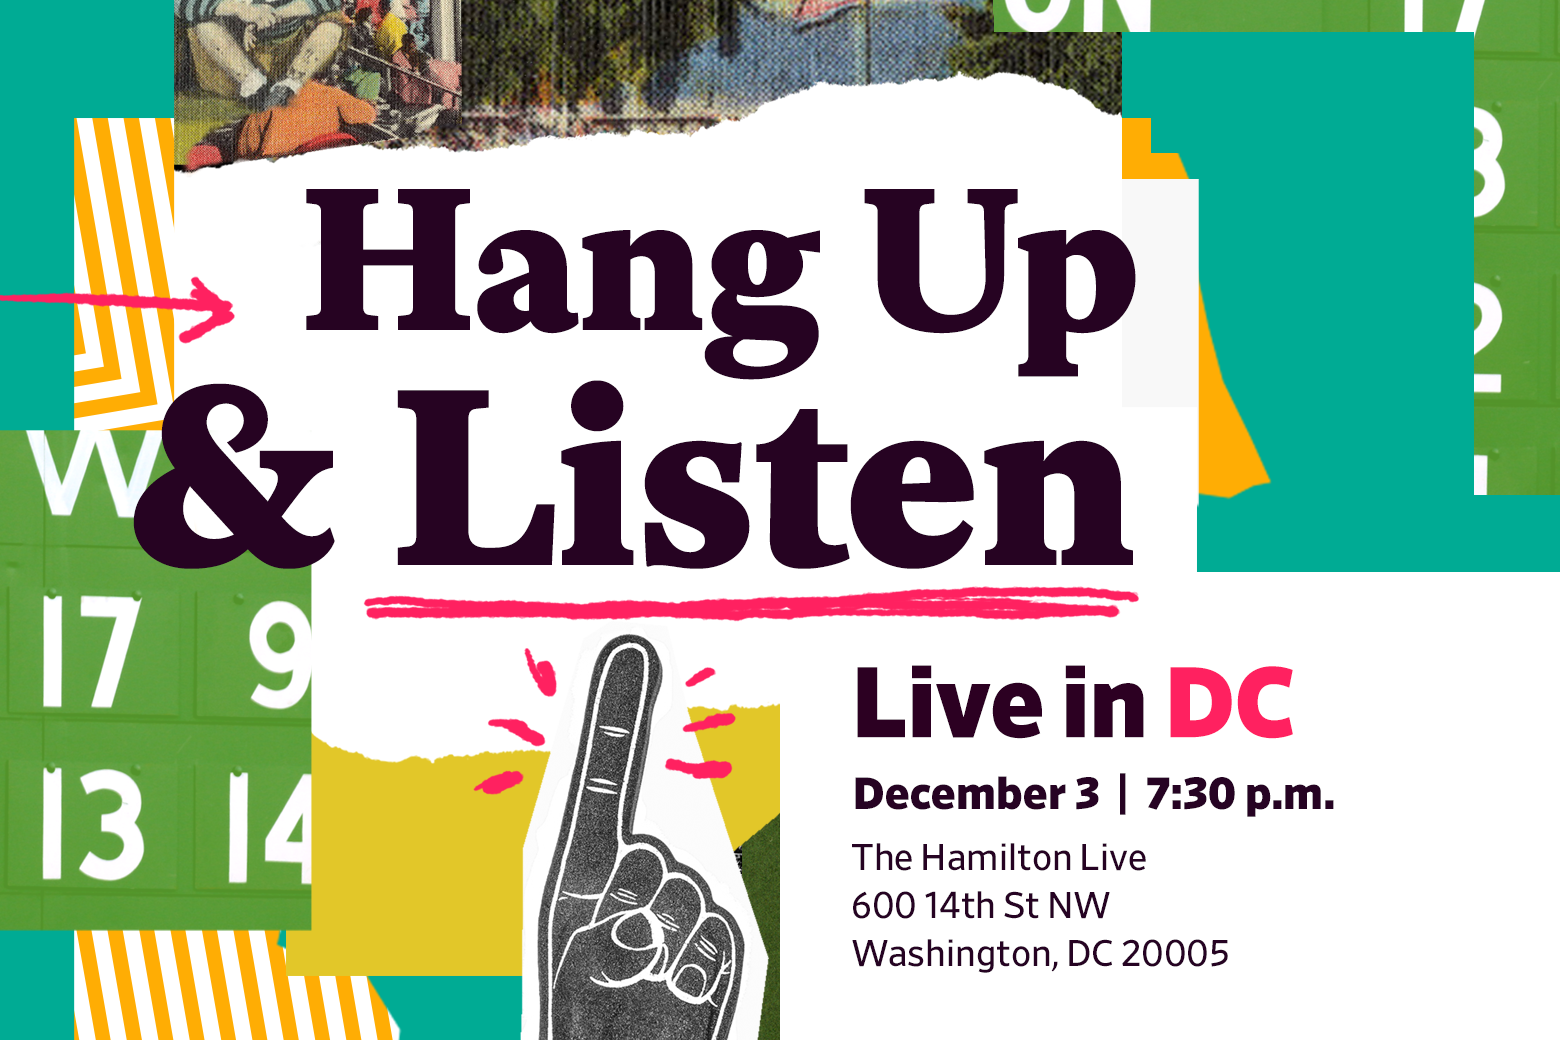 Hang Up & Listen event description